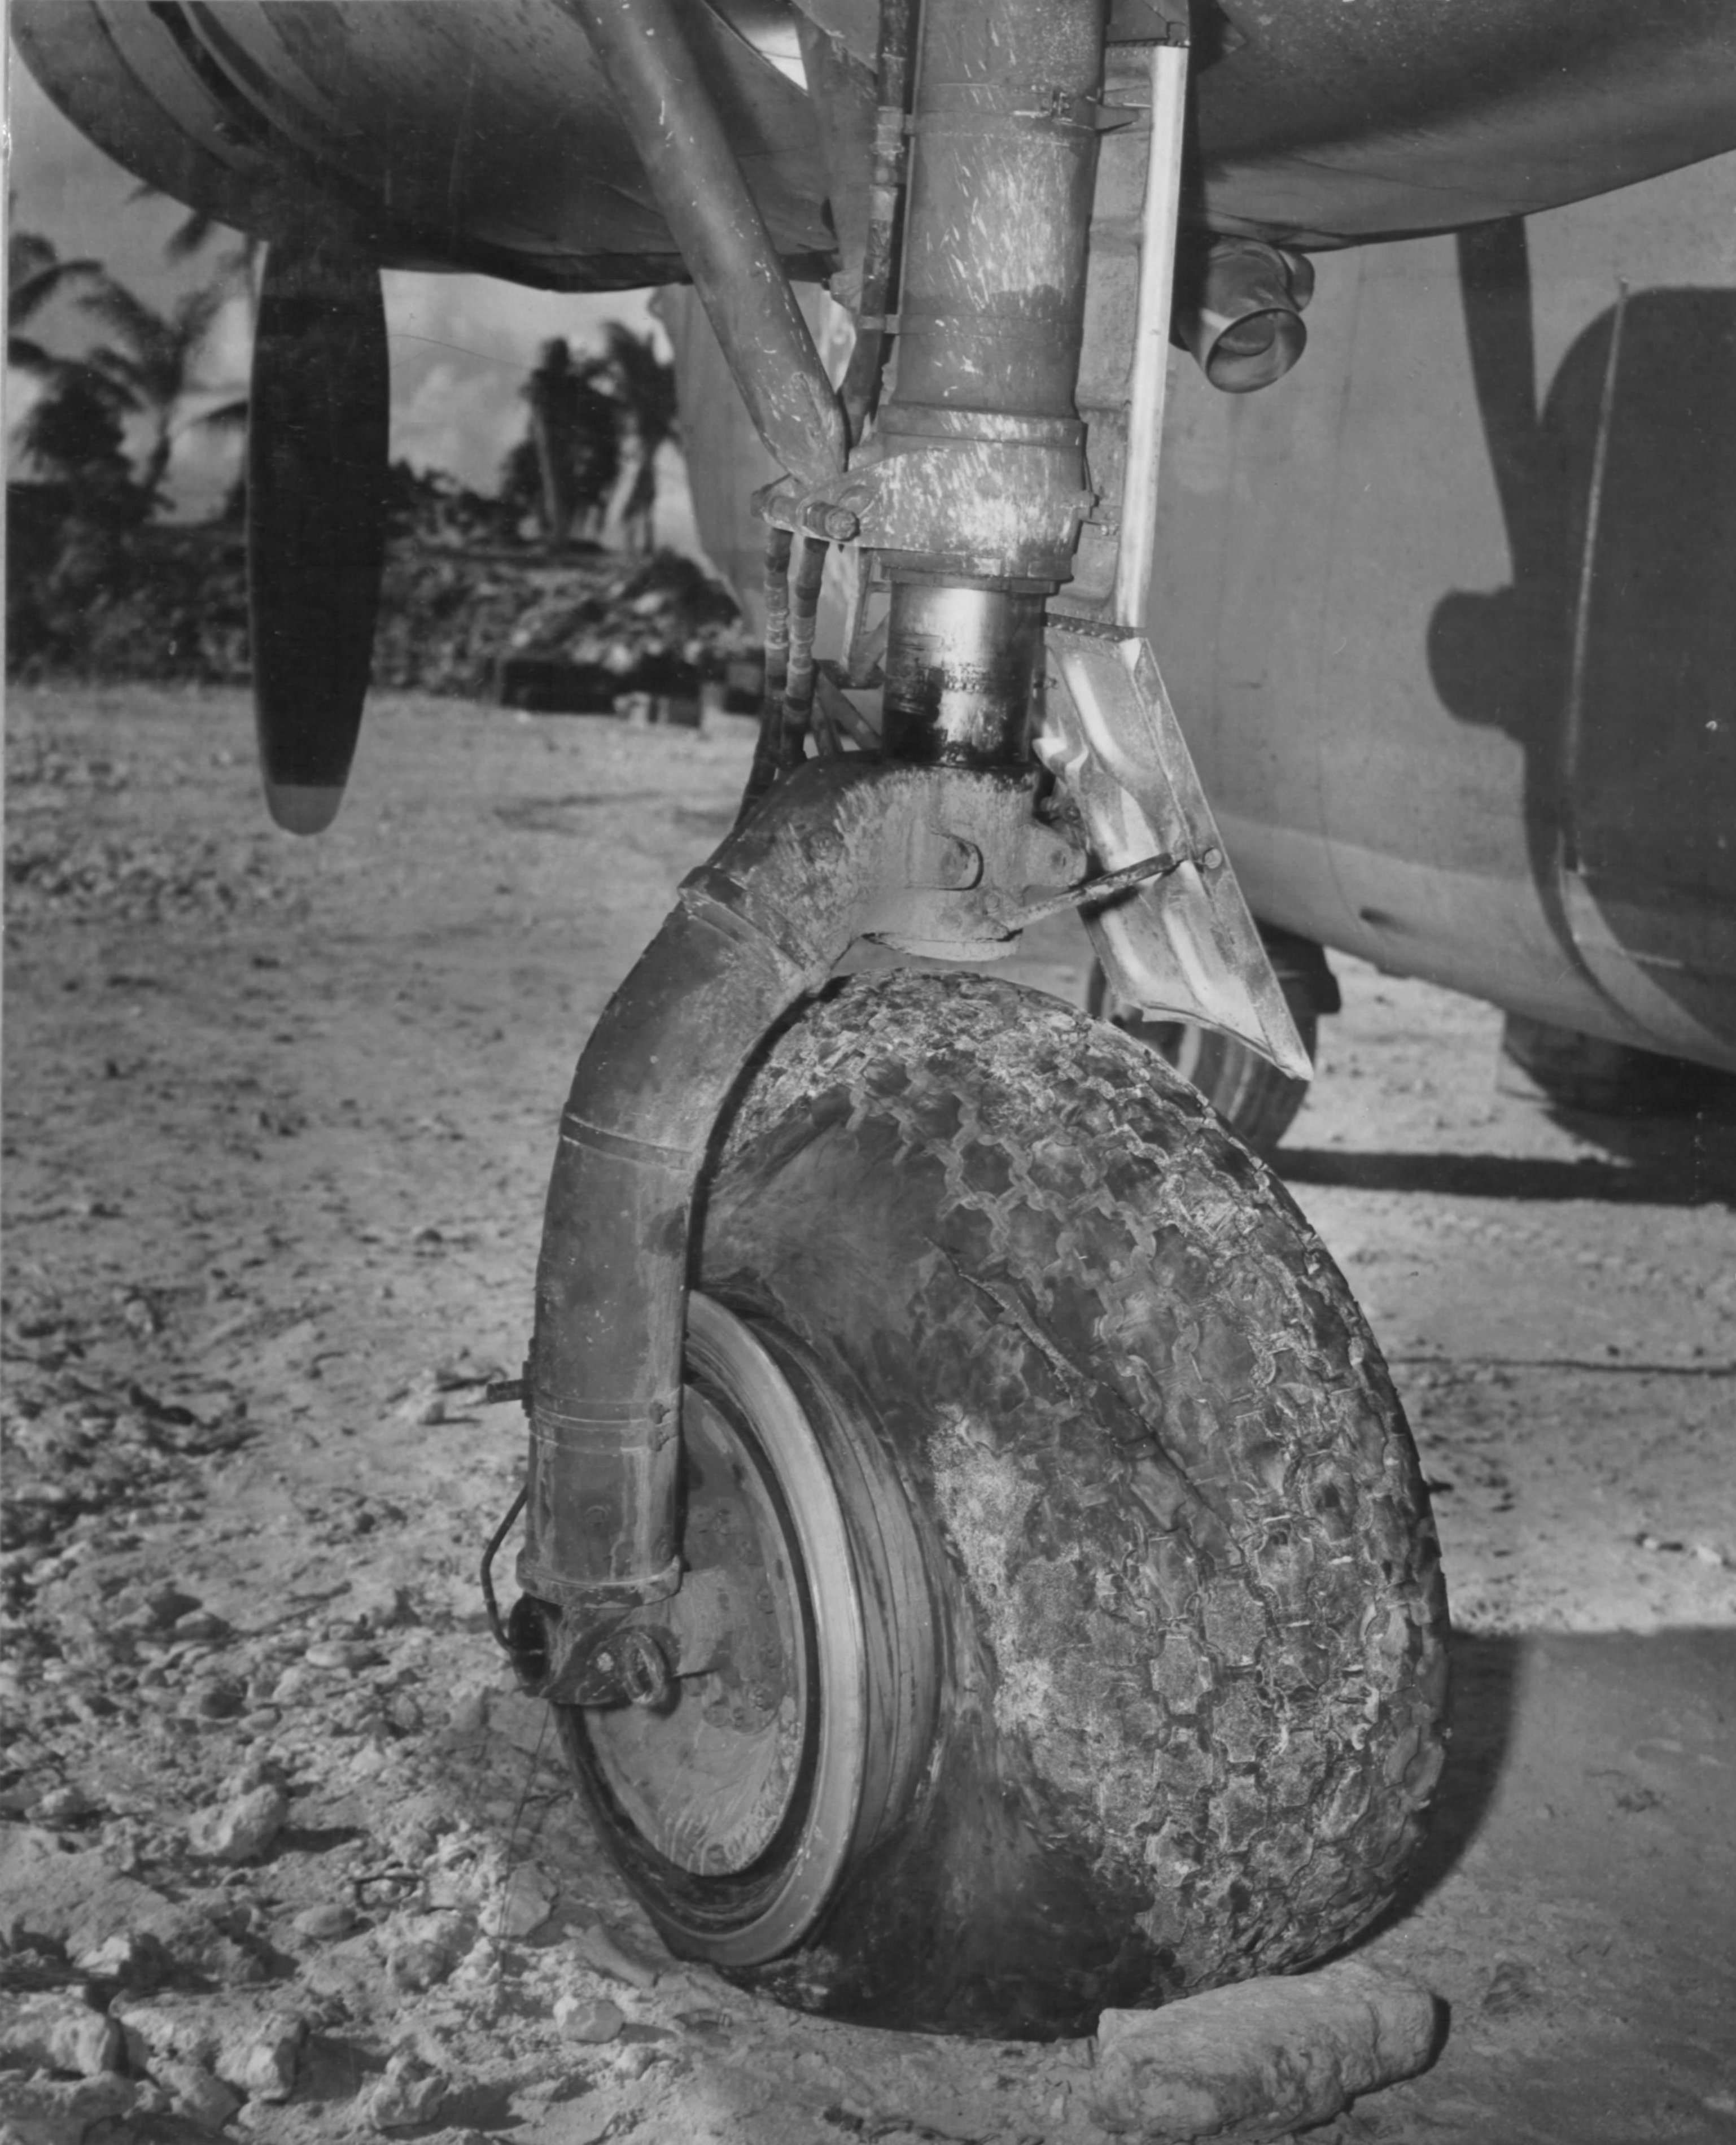 B-24D Liberator 'Superman' at Funafuti, Gilbert Islands, 20 Apr 1943, photo 4 of 4; note damage sustained in combat over Nauru